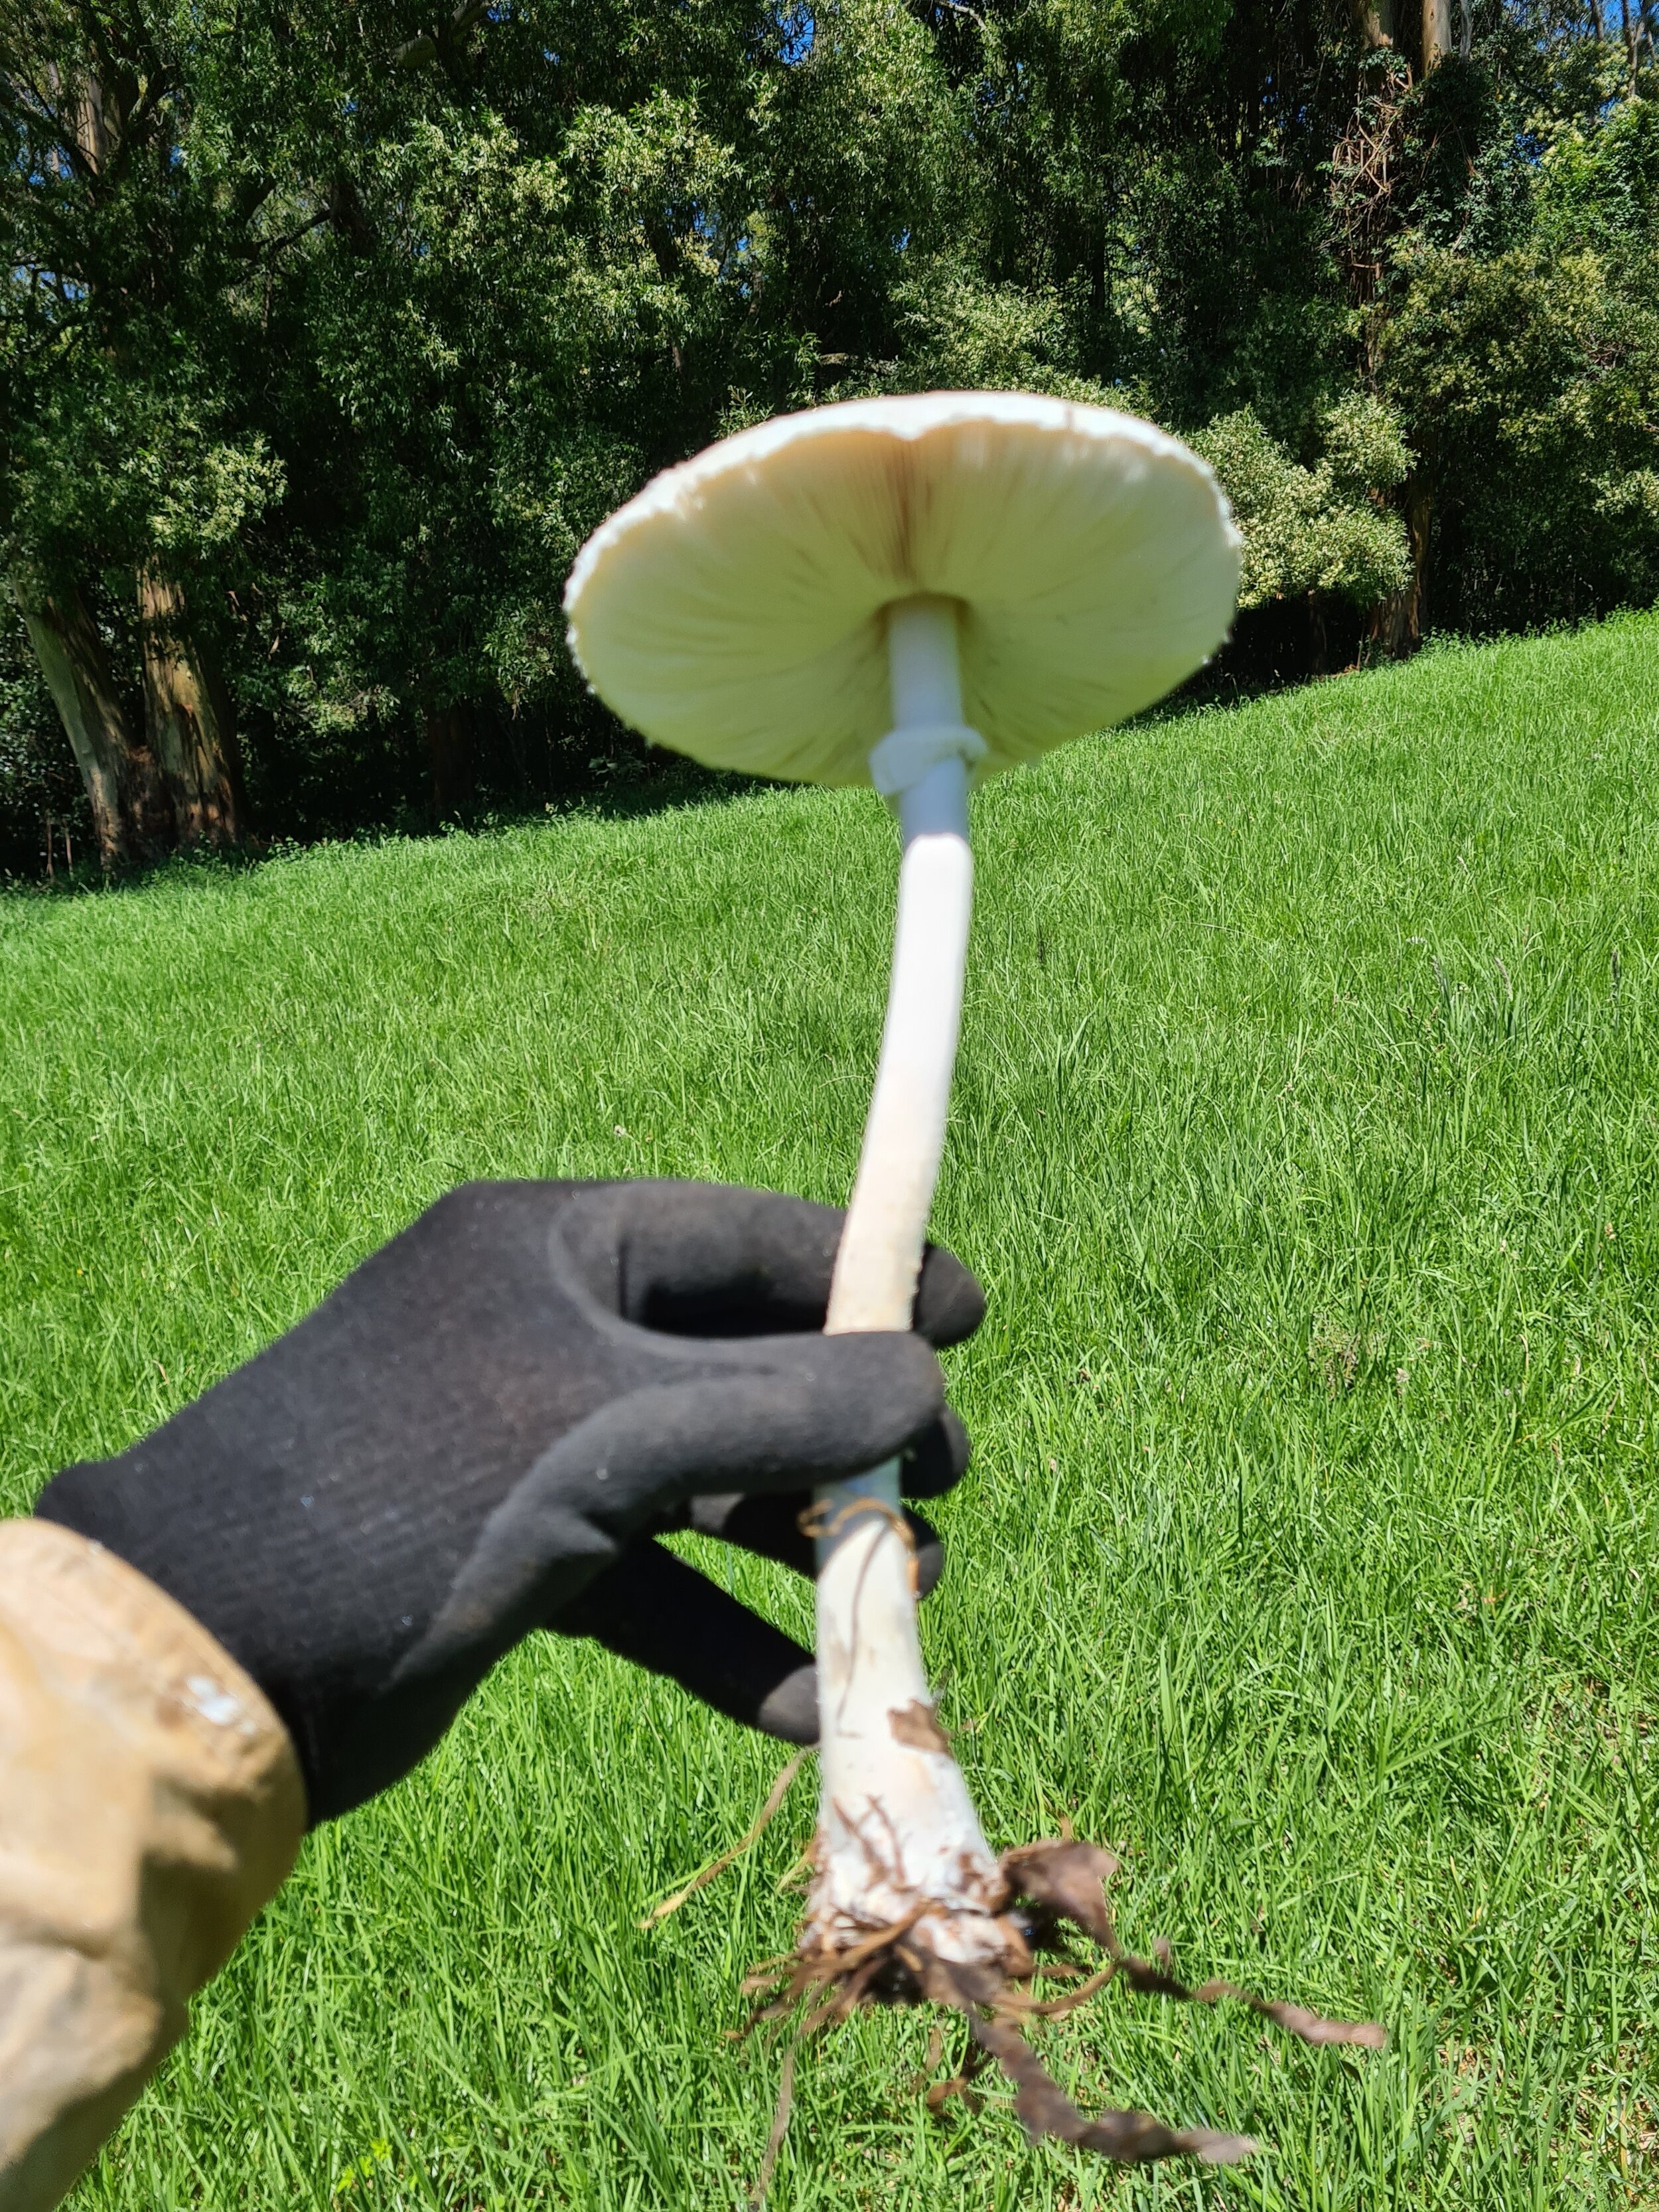 Mushroom 2.jpg